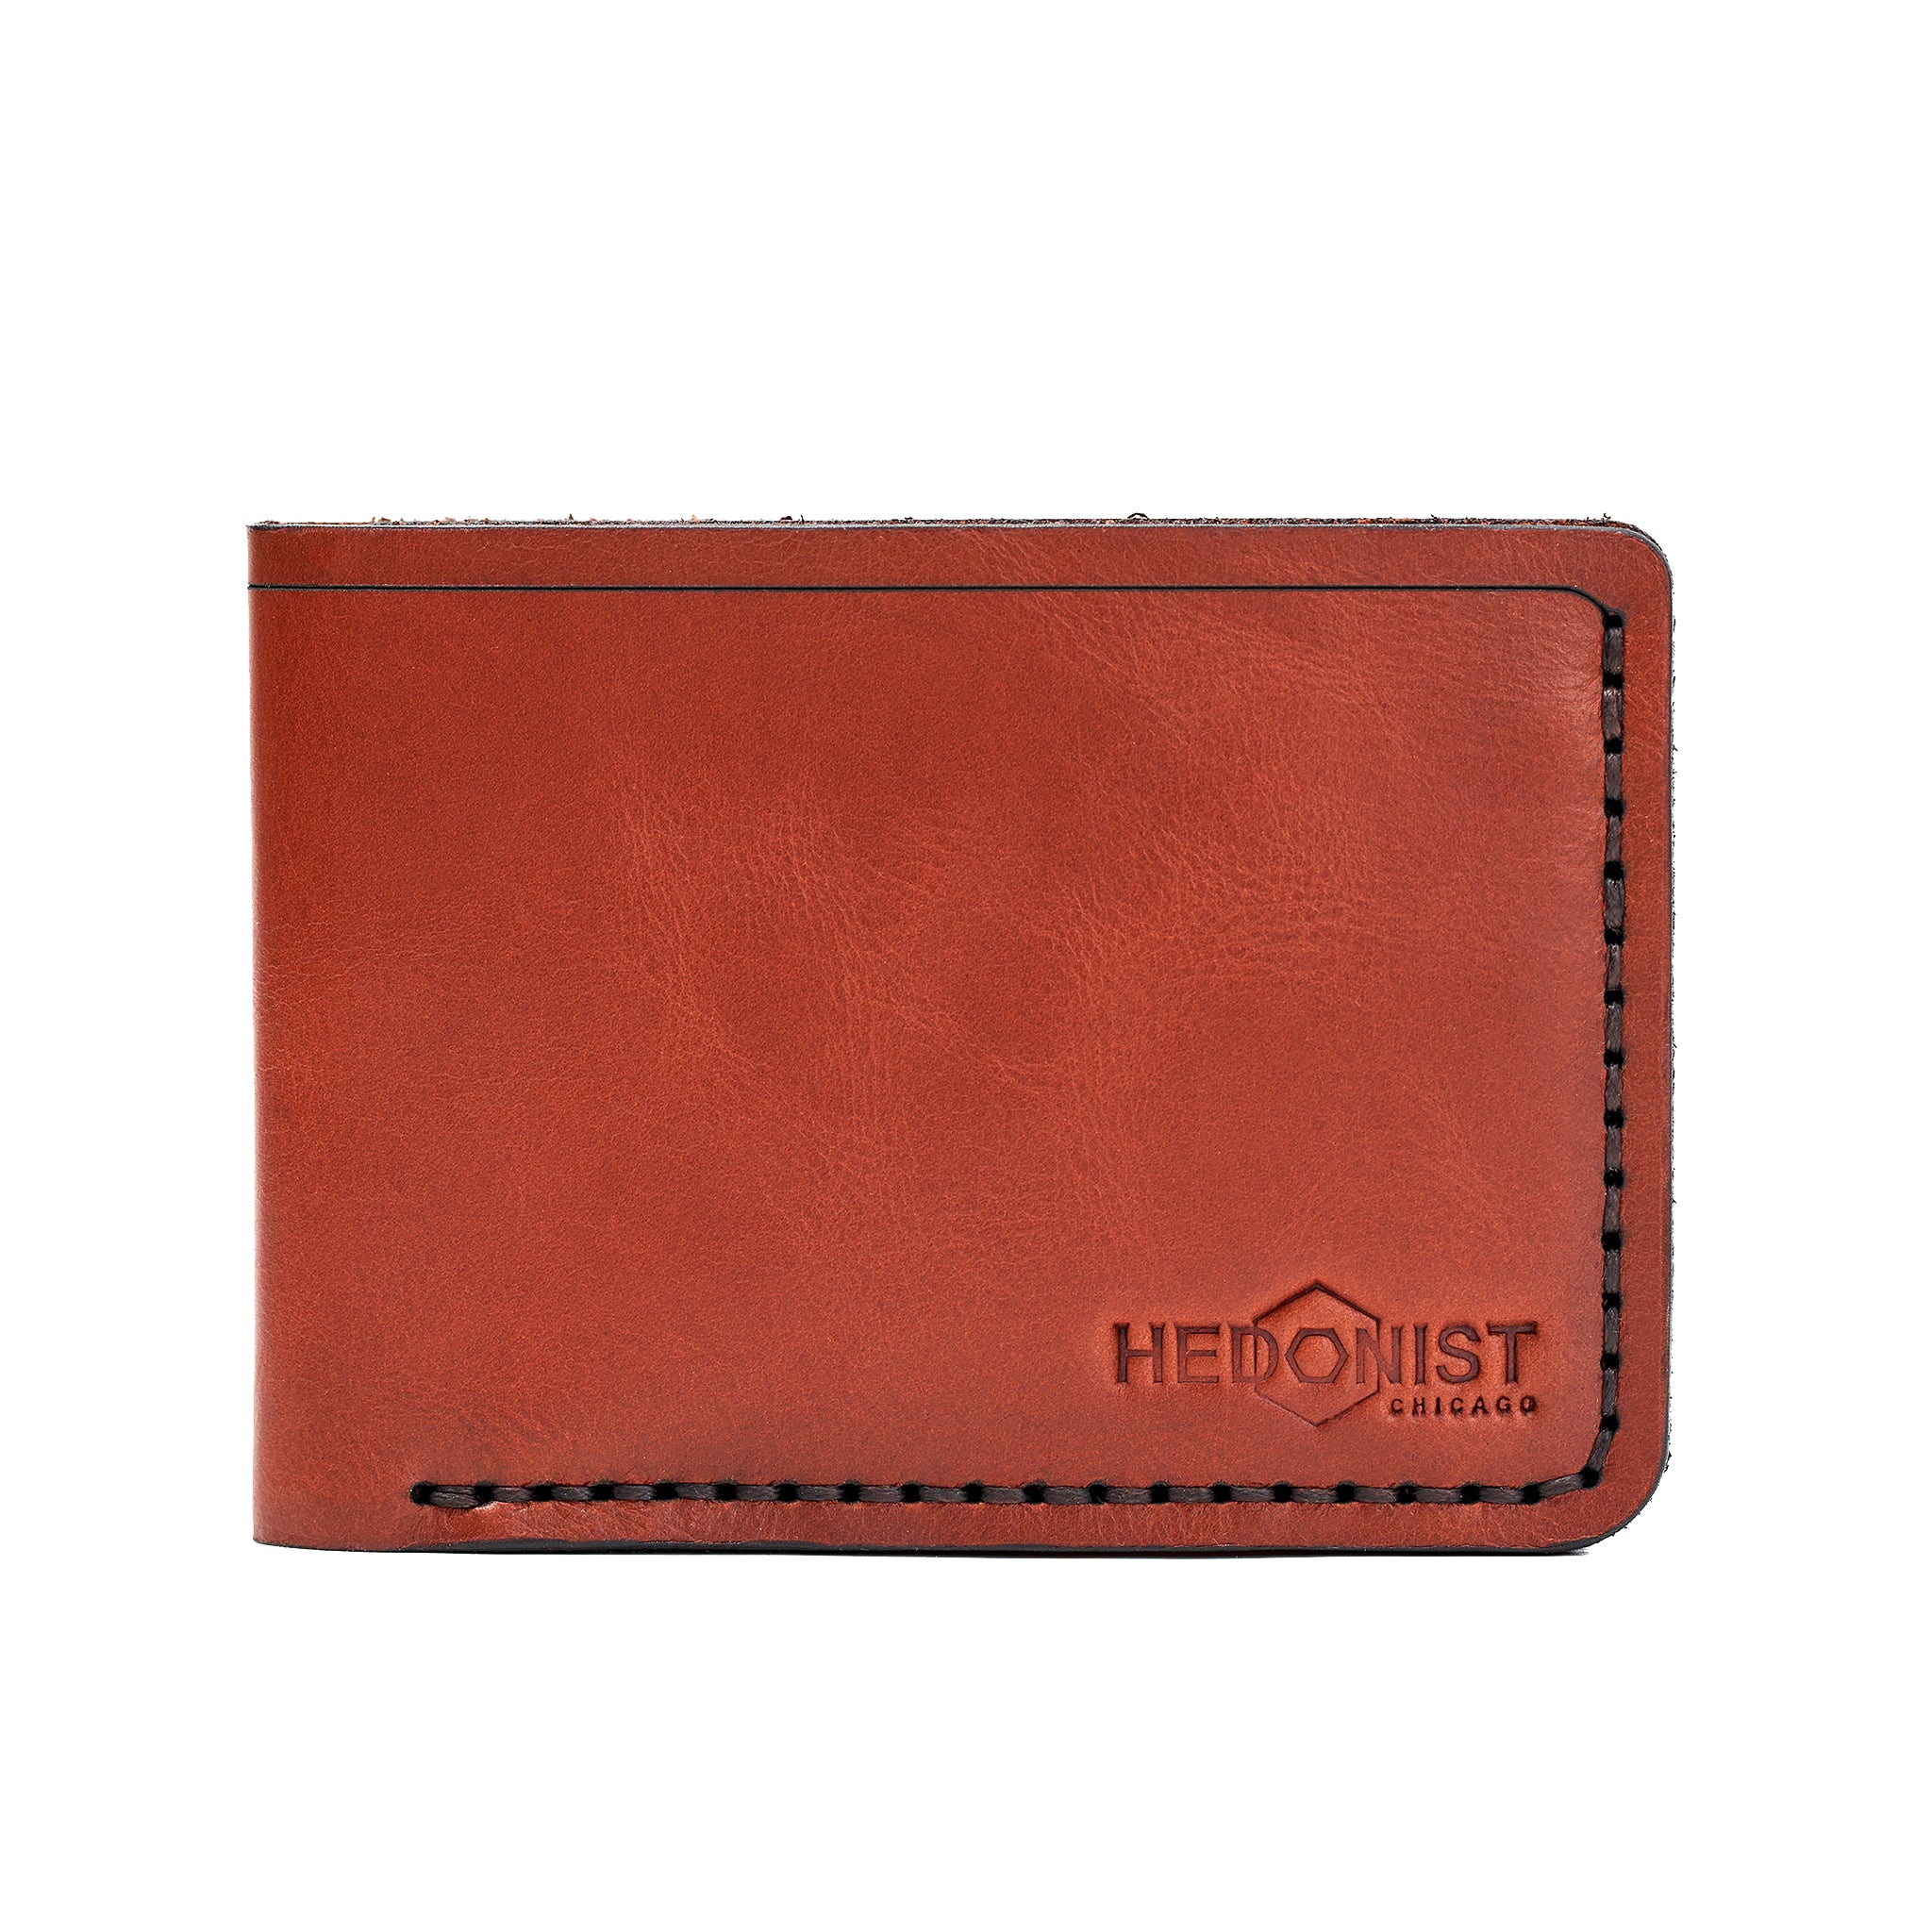 Handmade Men's Wallet 4 Card Slots Red Brick 31707838808215